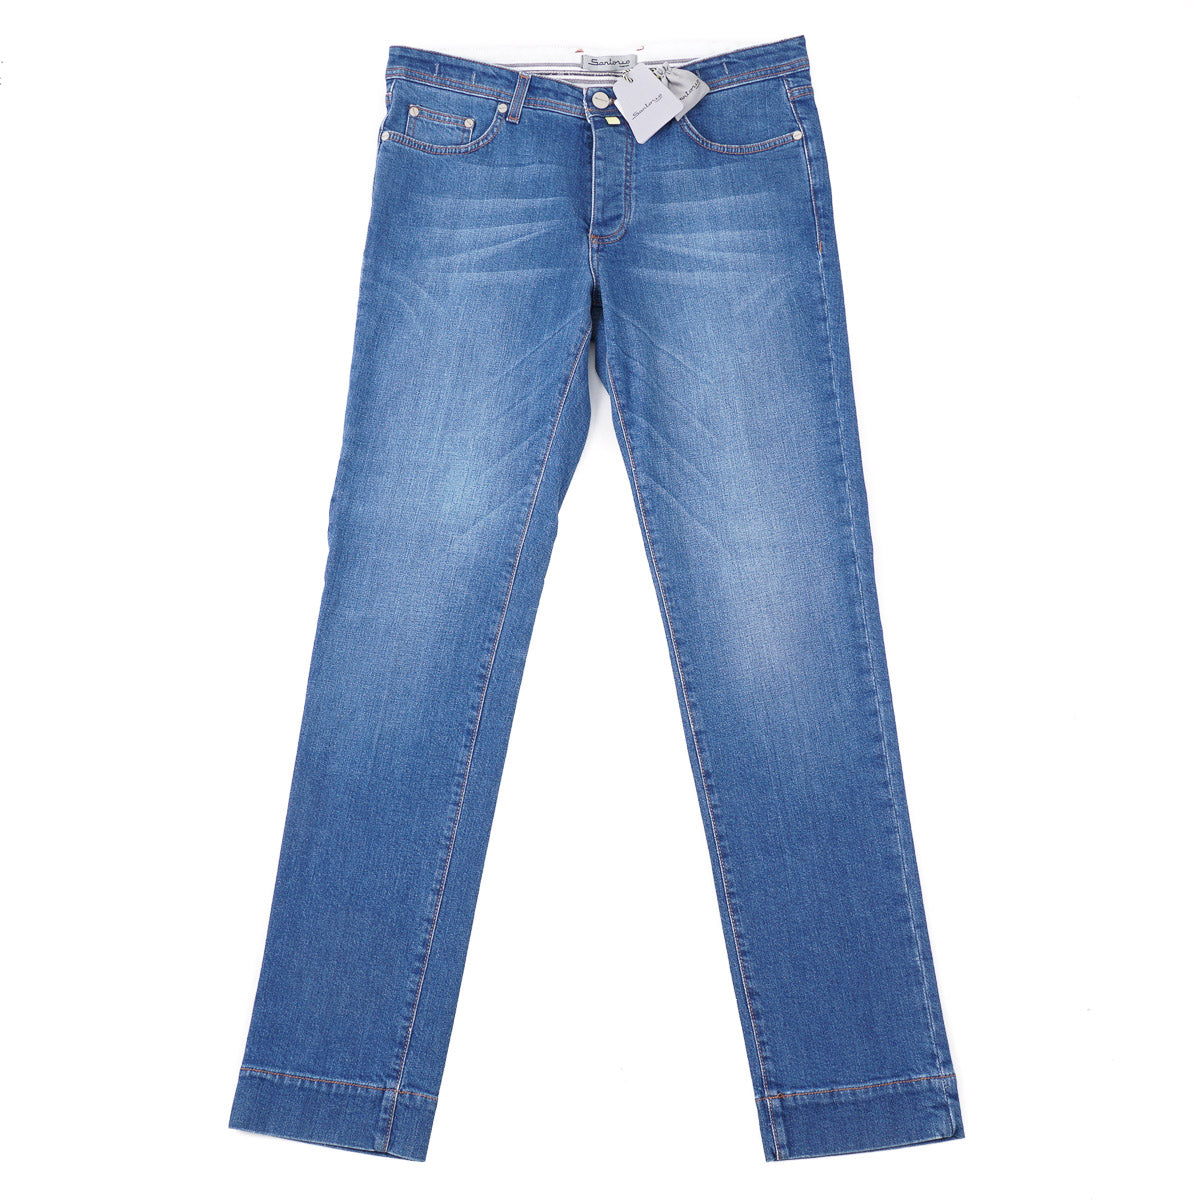 Sartorio Straight-Fit Denim Jeans - Top Shelf Apparel